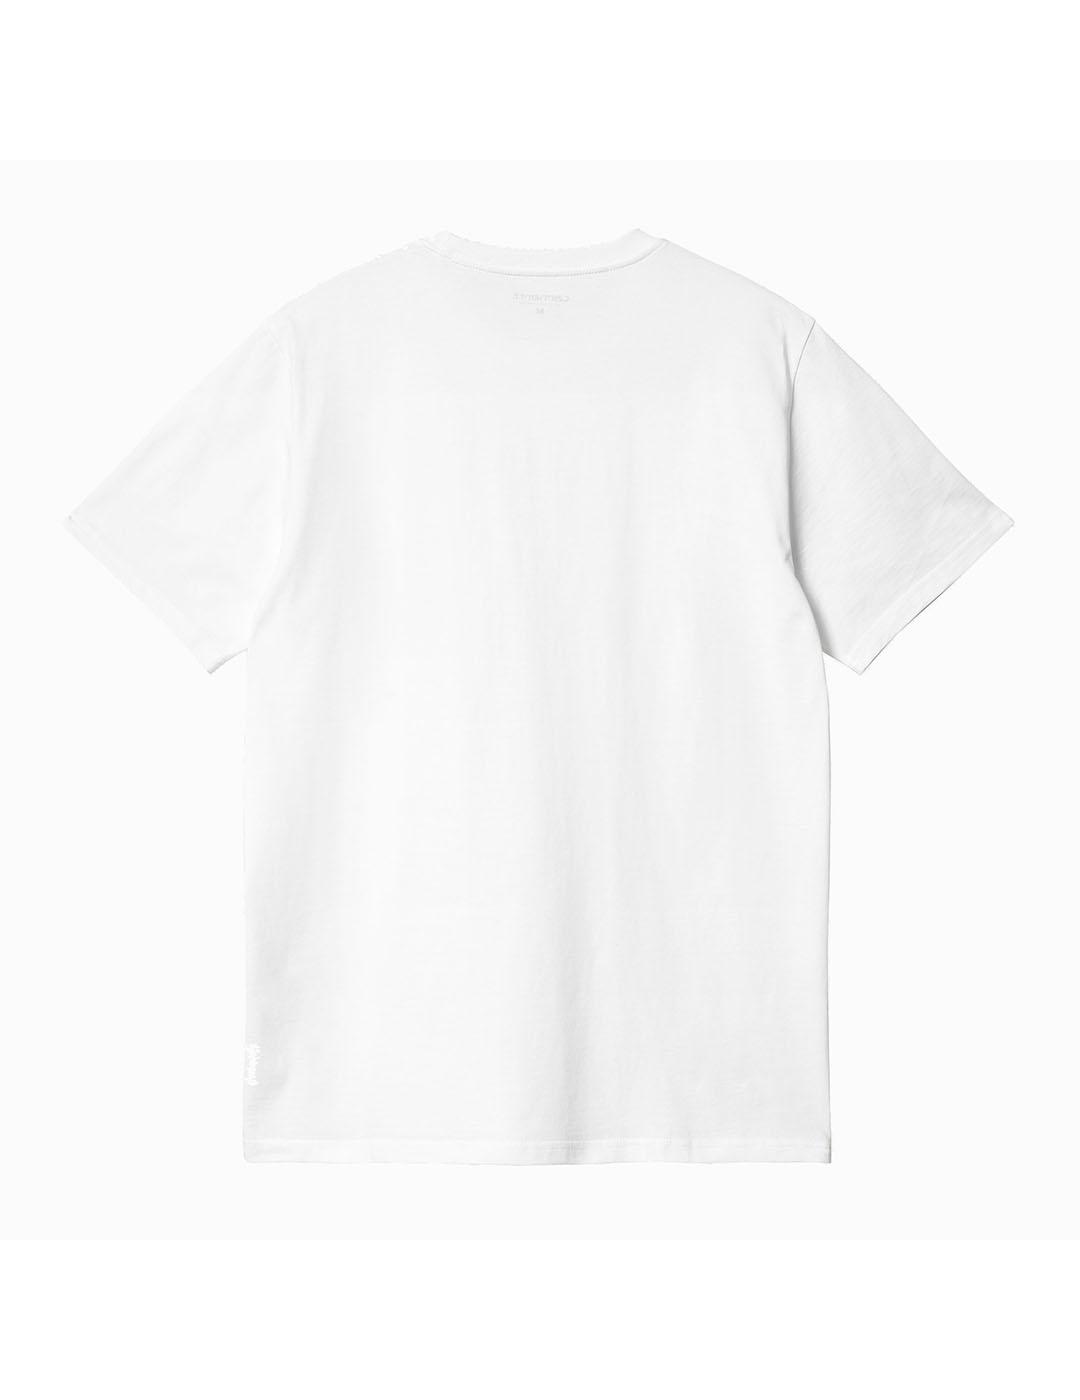 Camiseta Hombre Carhartt WIP Pocket Blanca